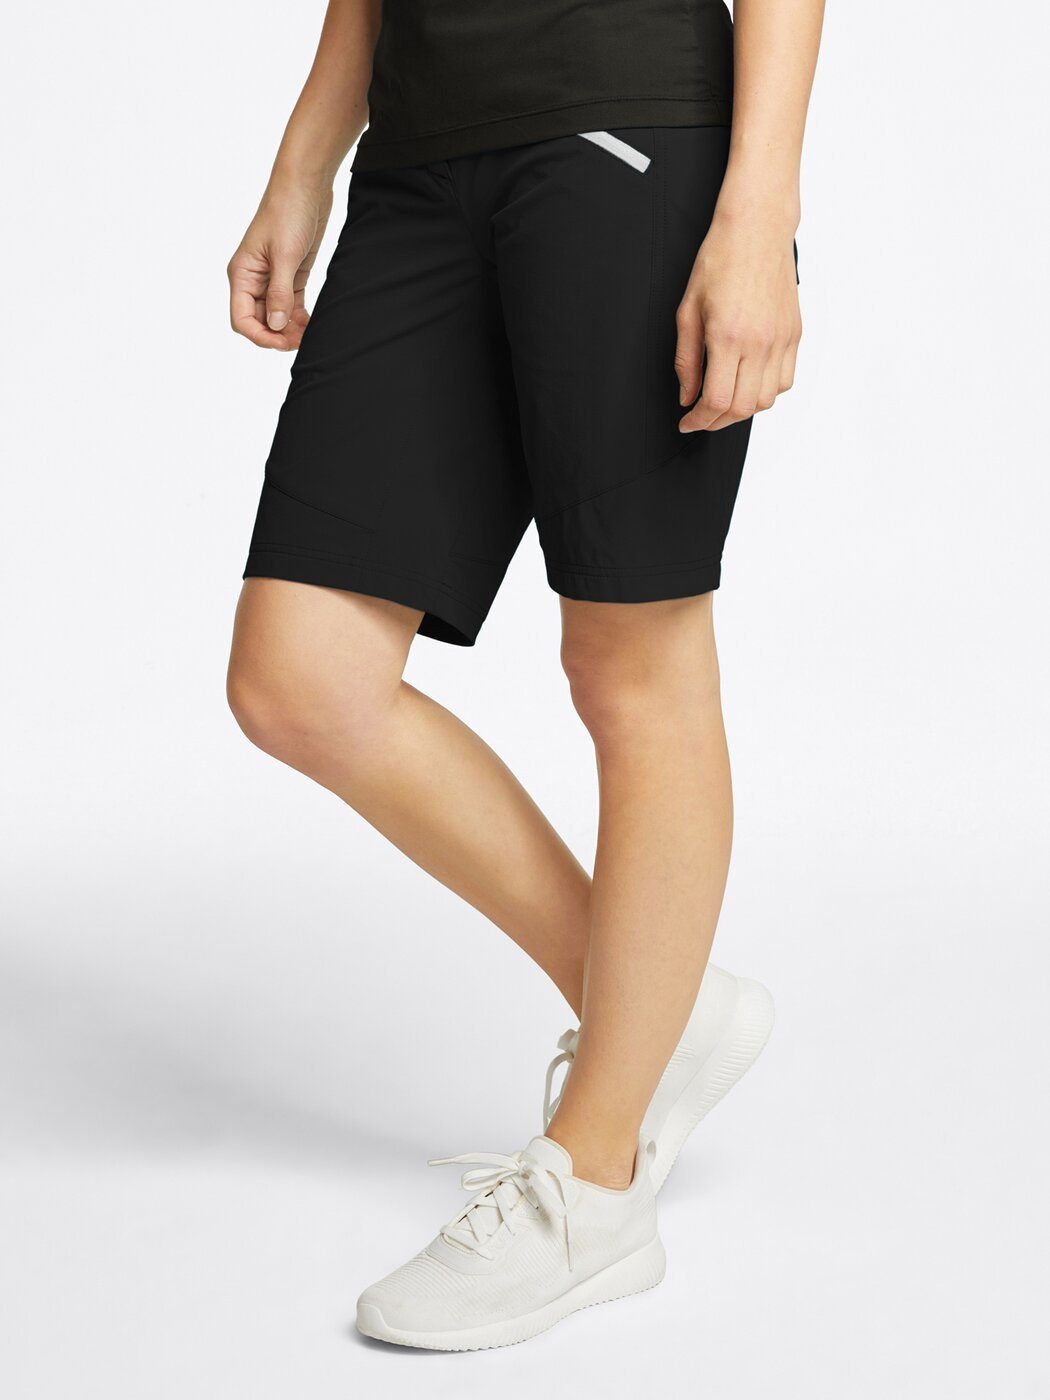 Ziener Shorts NASITA lady 1201 X-Function (shorts) black.white